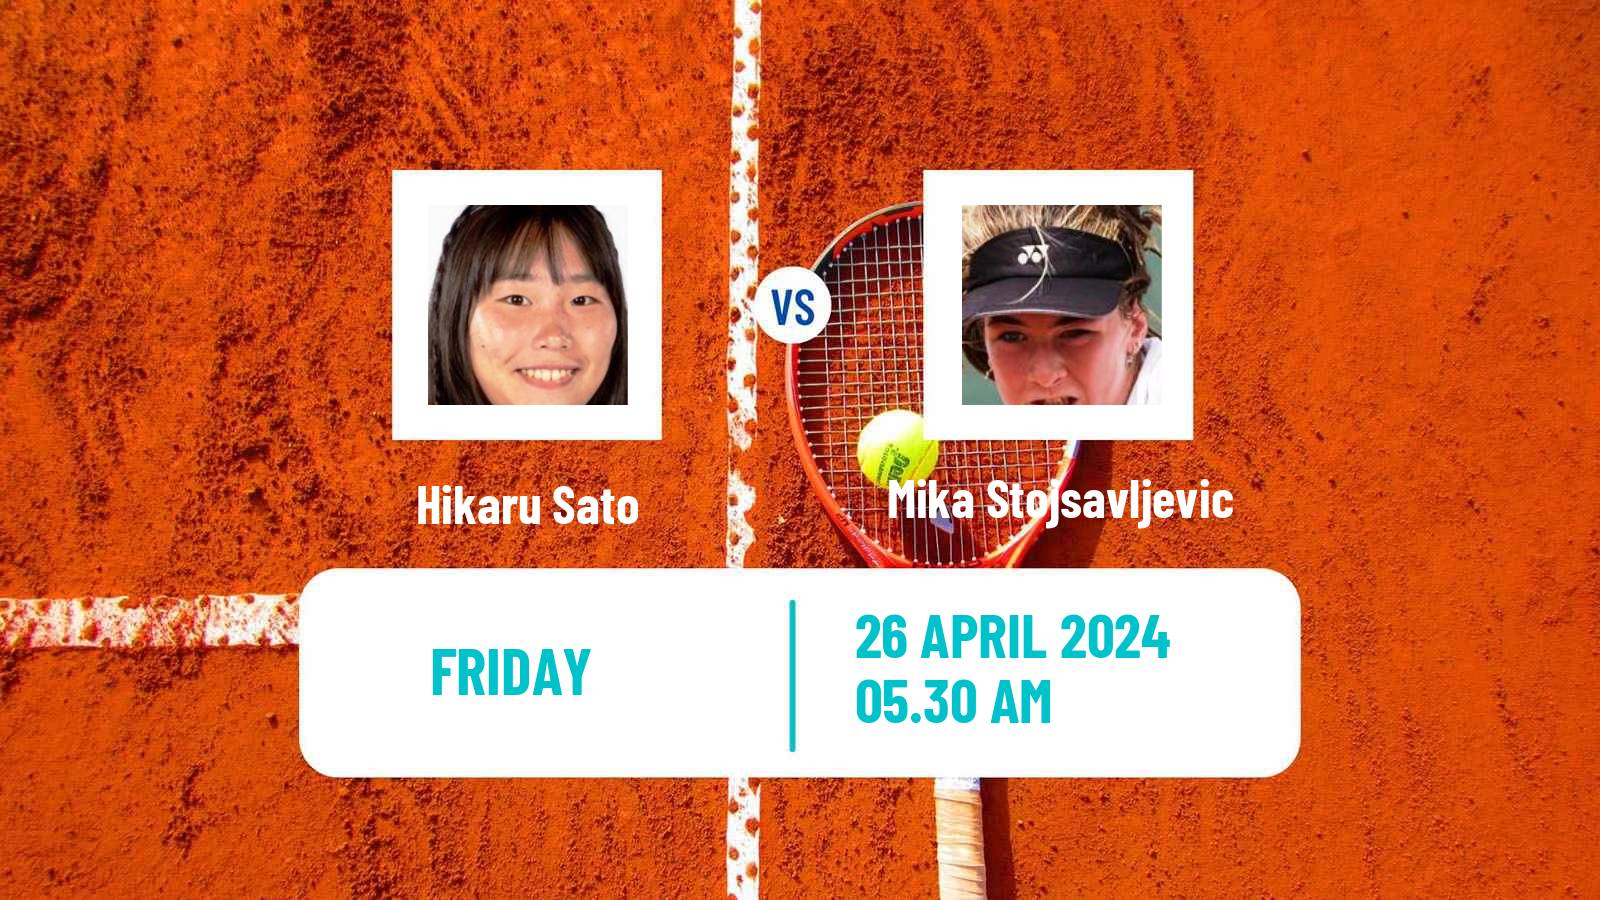 Tennis ITF W35 Nottingham Women Hikaru Sato - Mika Stojsavljevic